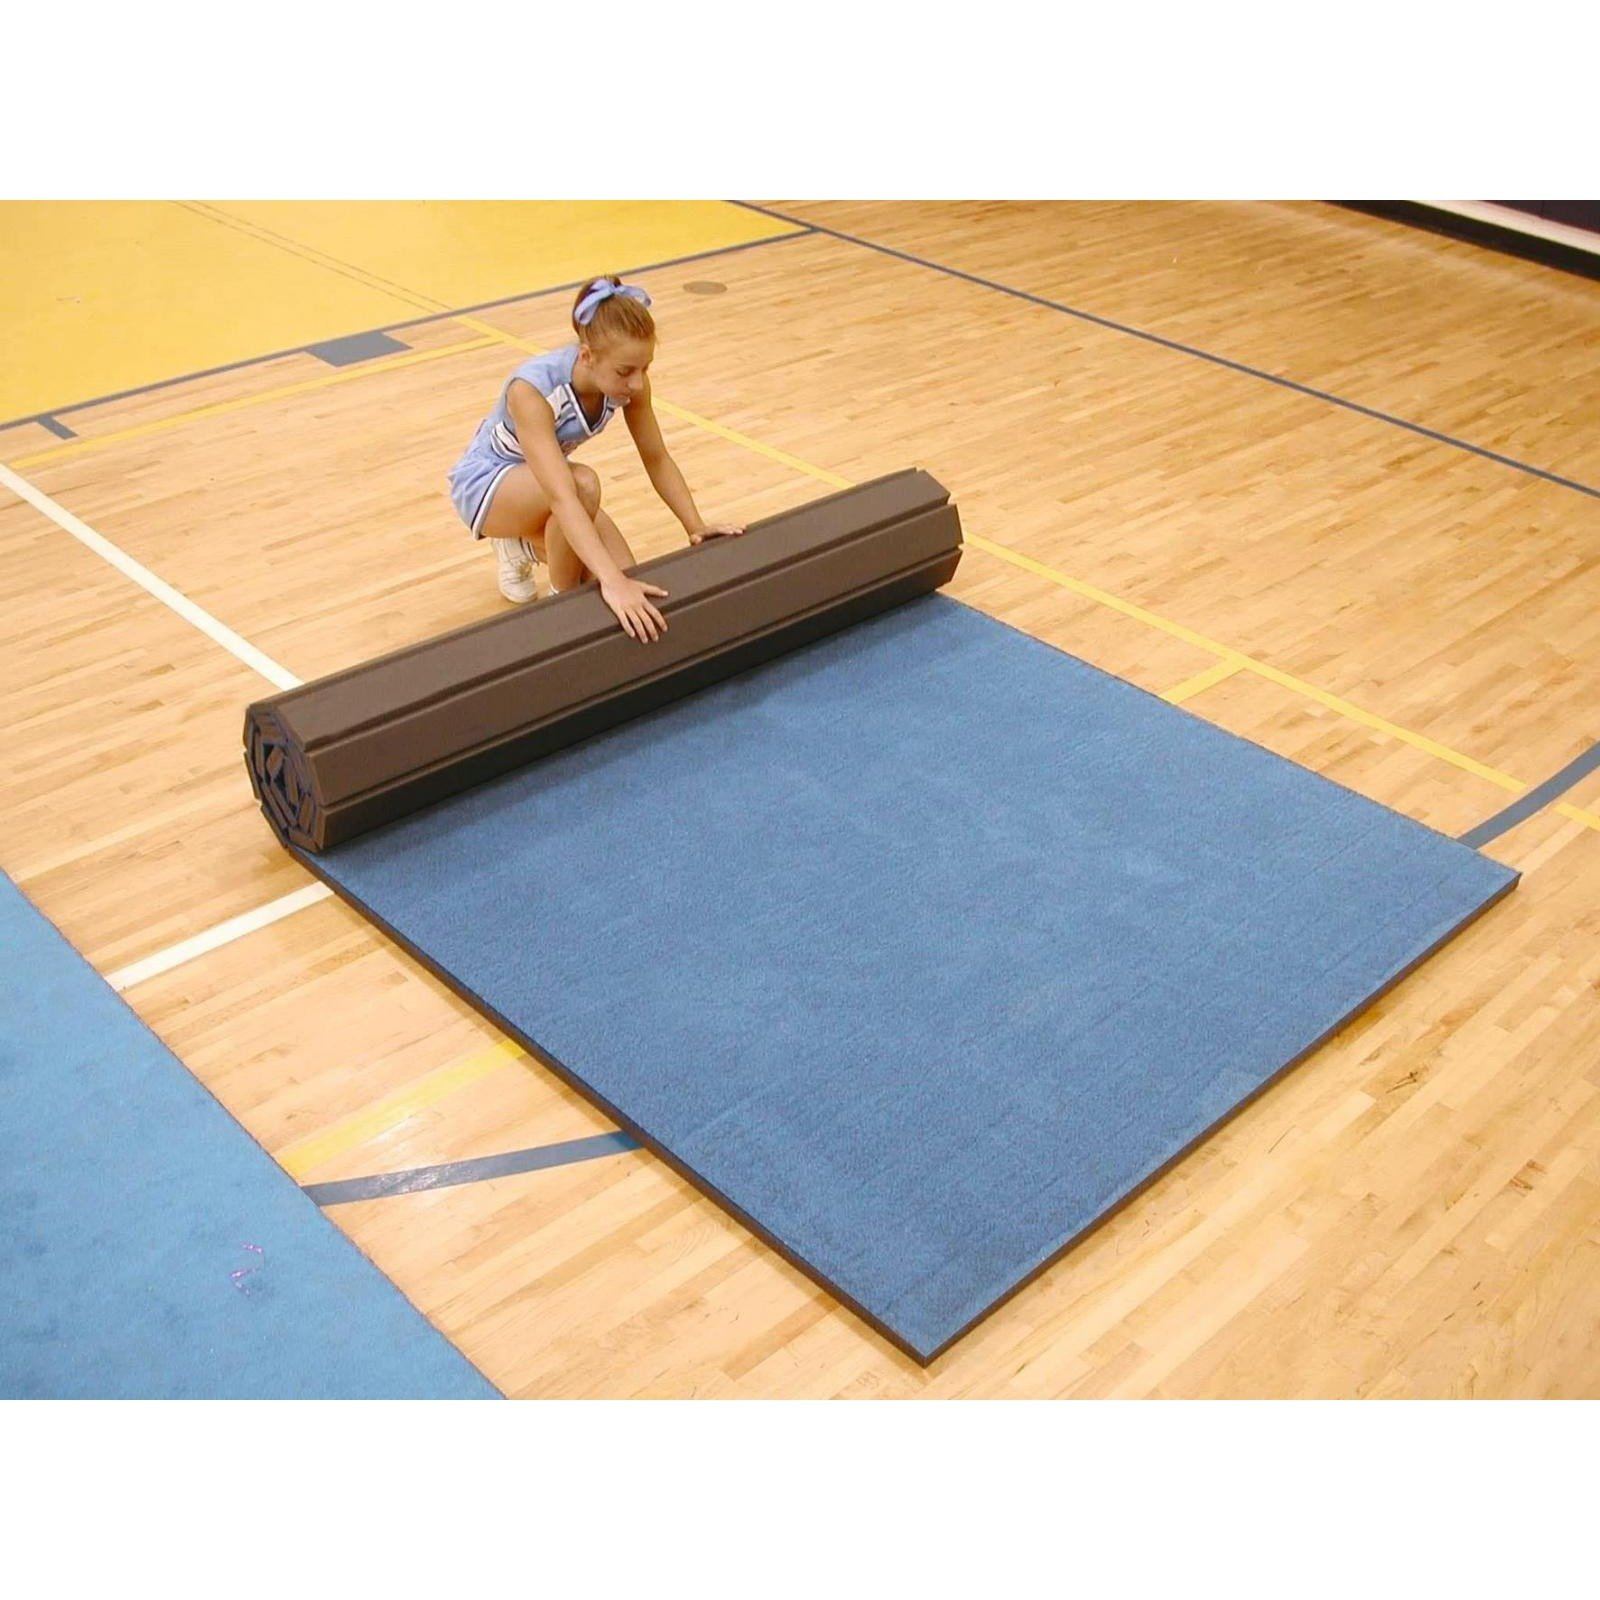 12 metre Cannons UK Rollaway Gymnastics Wrestling Martial Arts Mat Carpet Top Blue or Black - Cannons UK